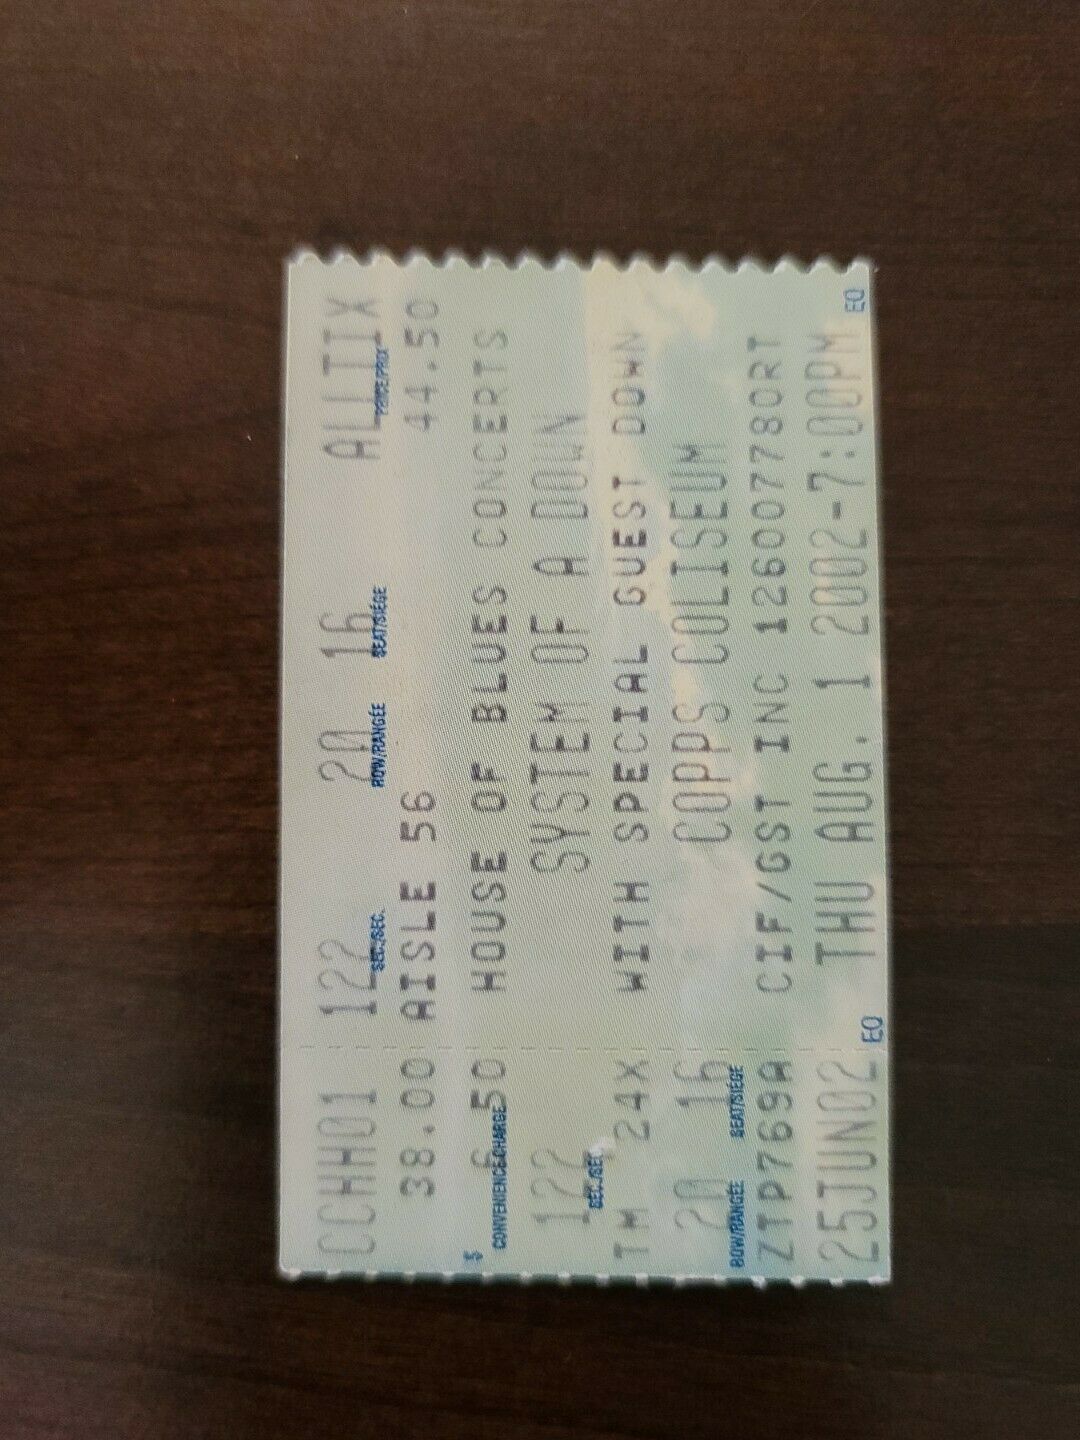 System Of A Down 2002, Hamilton Copps Coliseum Original Concert Ticket Stub